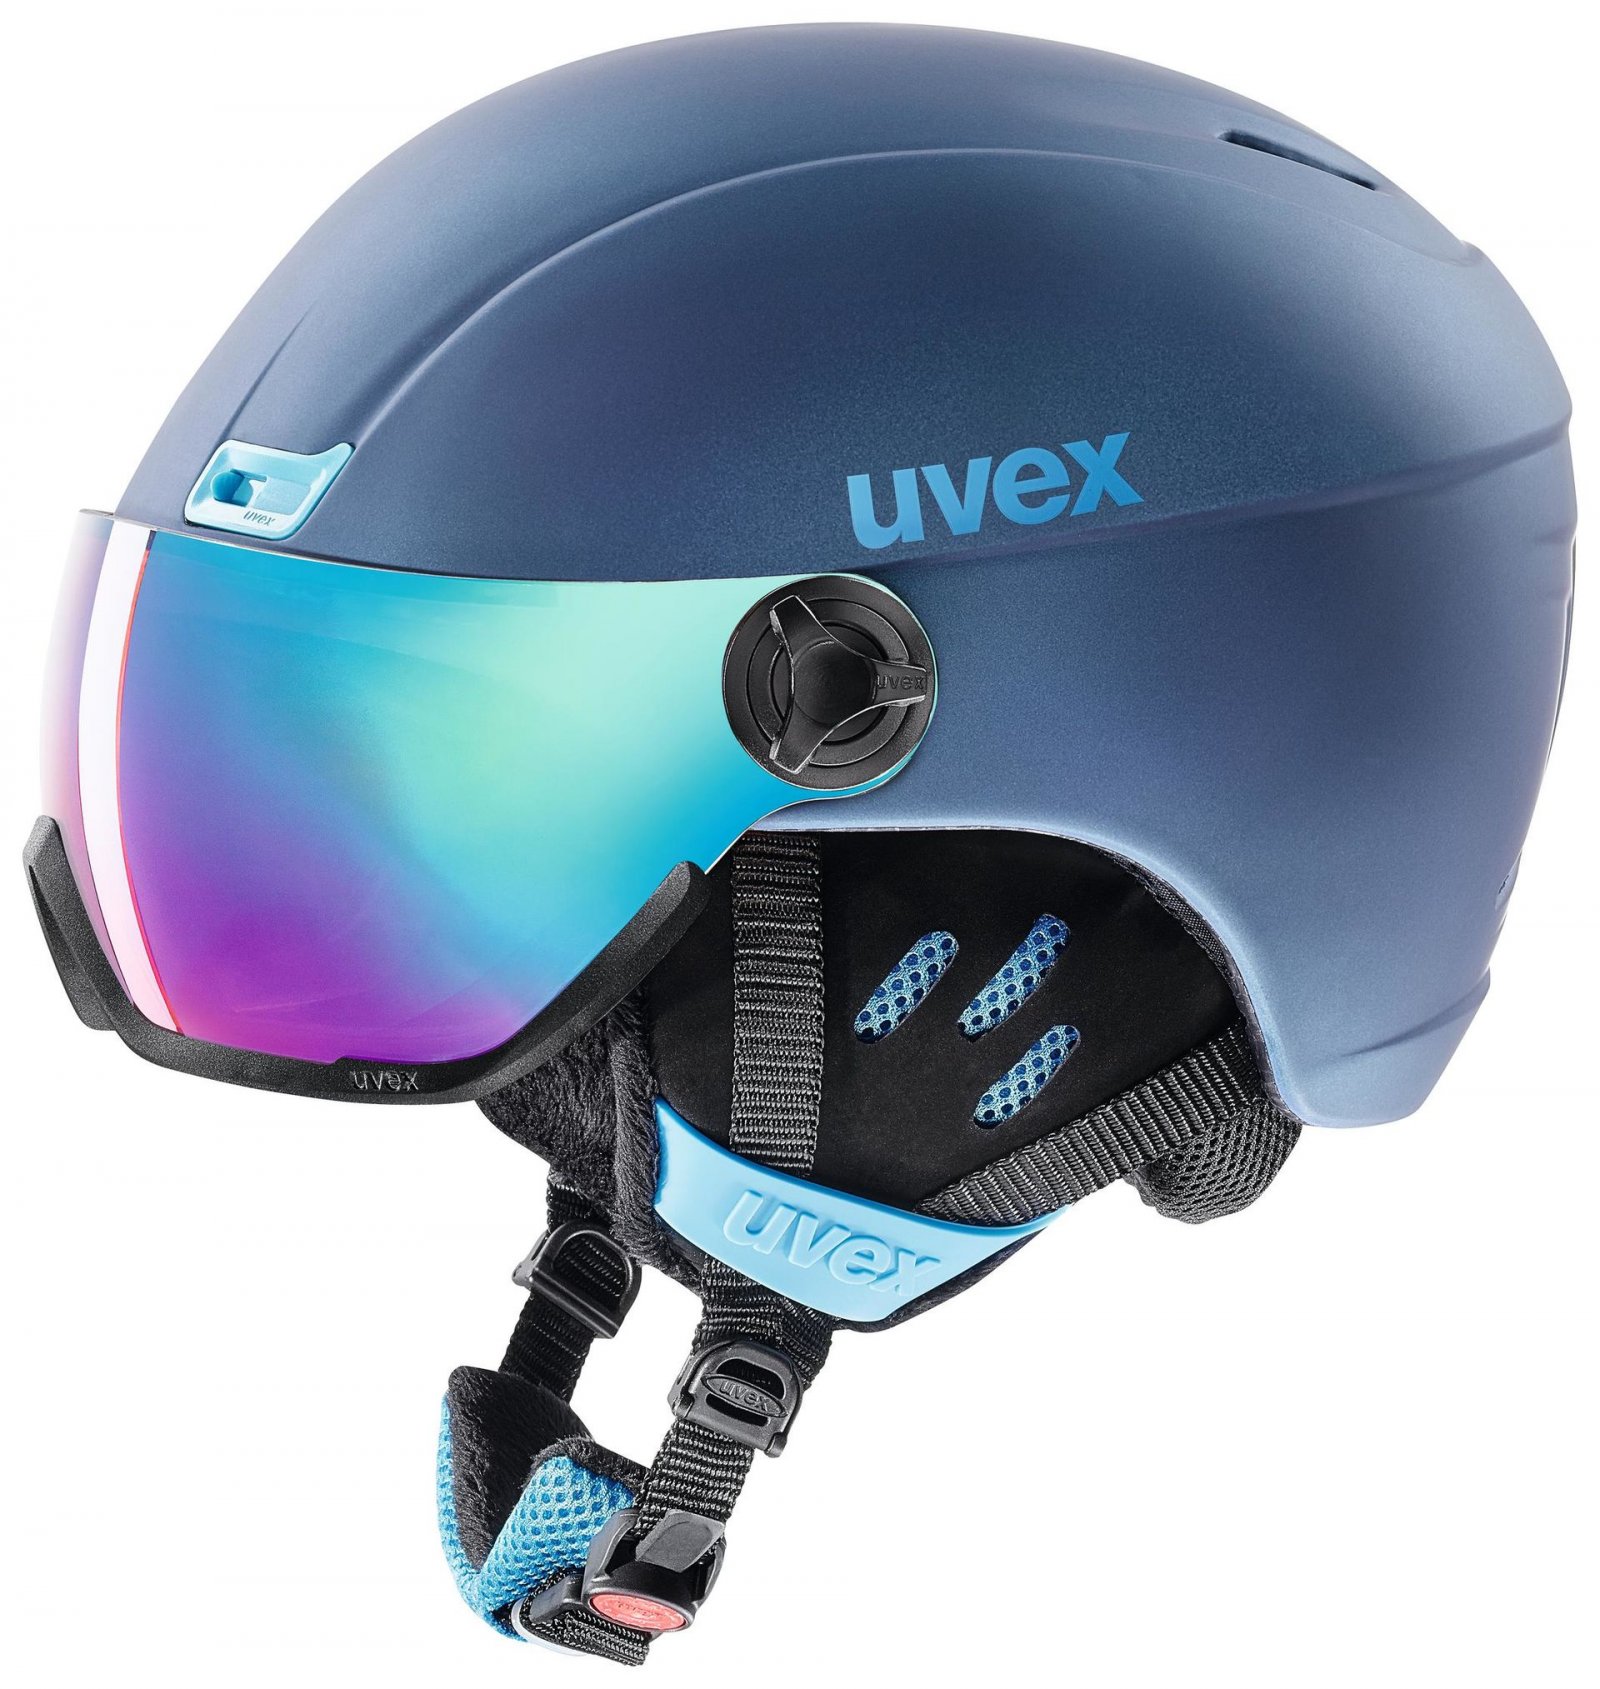 Ski helmet UVEX hlmt 400 visor style 20/21